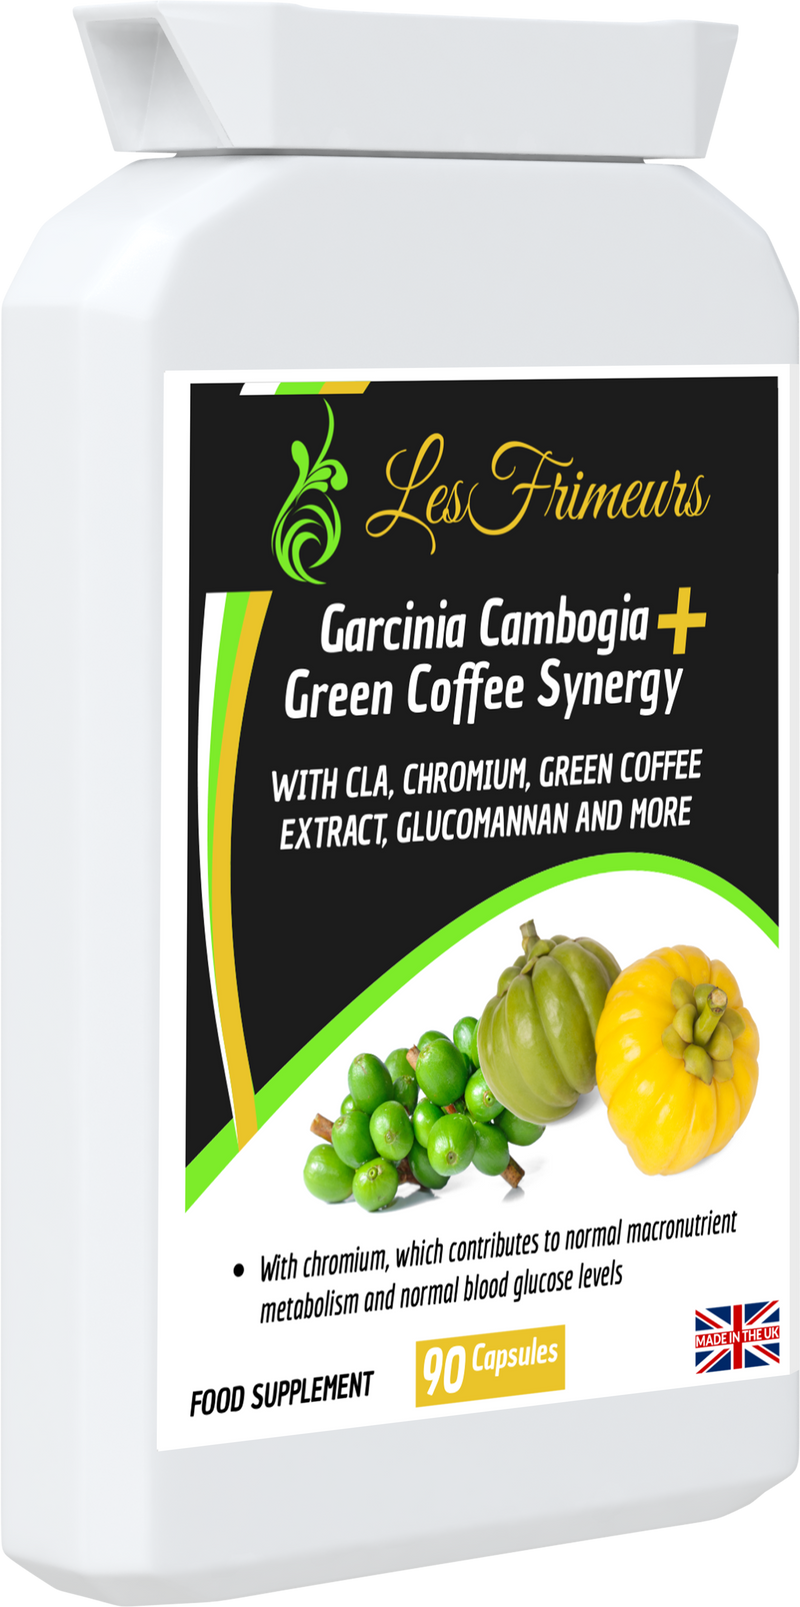 Garcinia Cambogia + Green Coffee Synergy